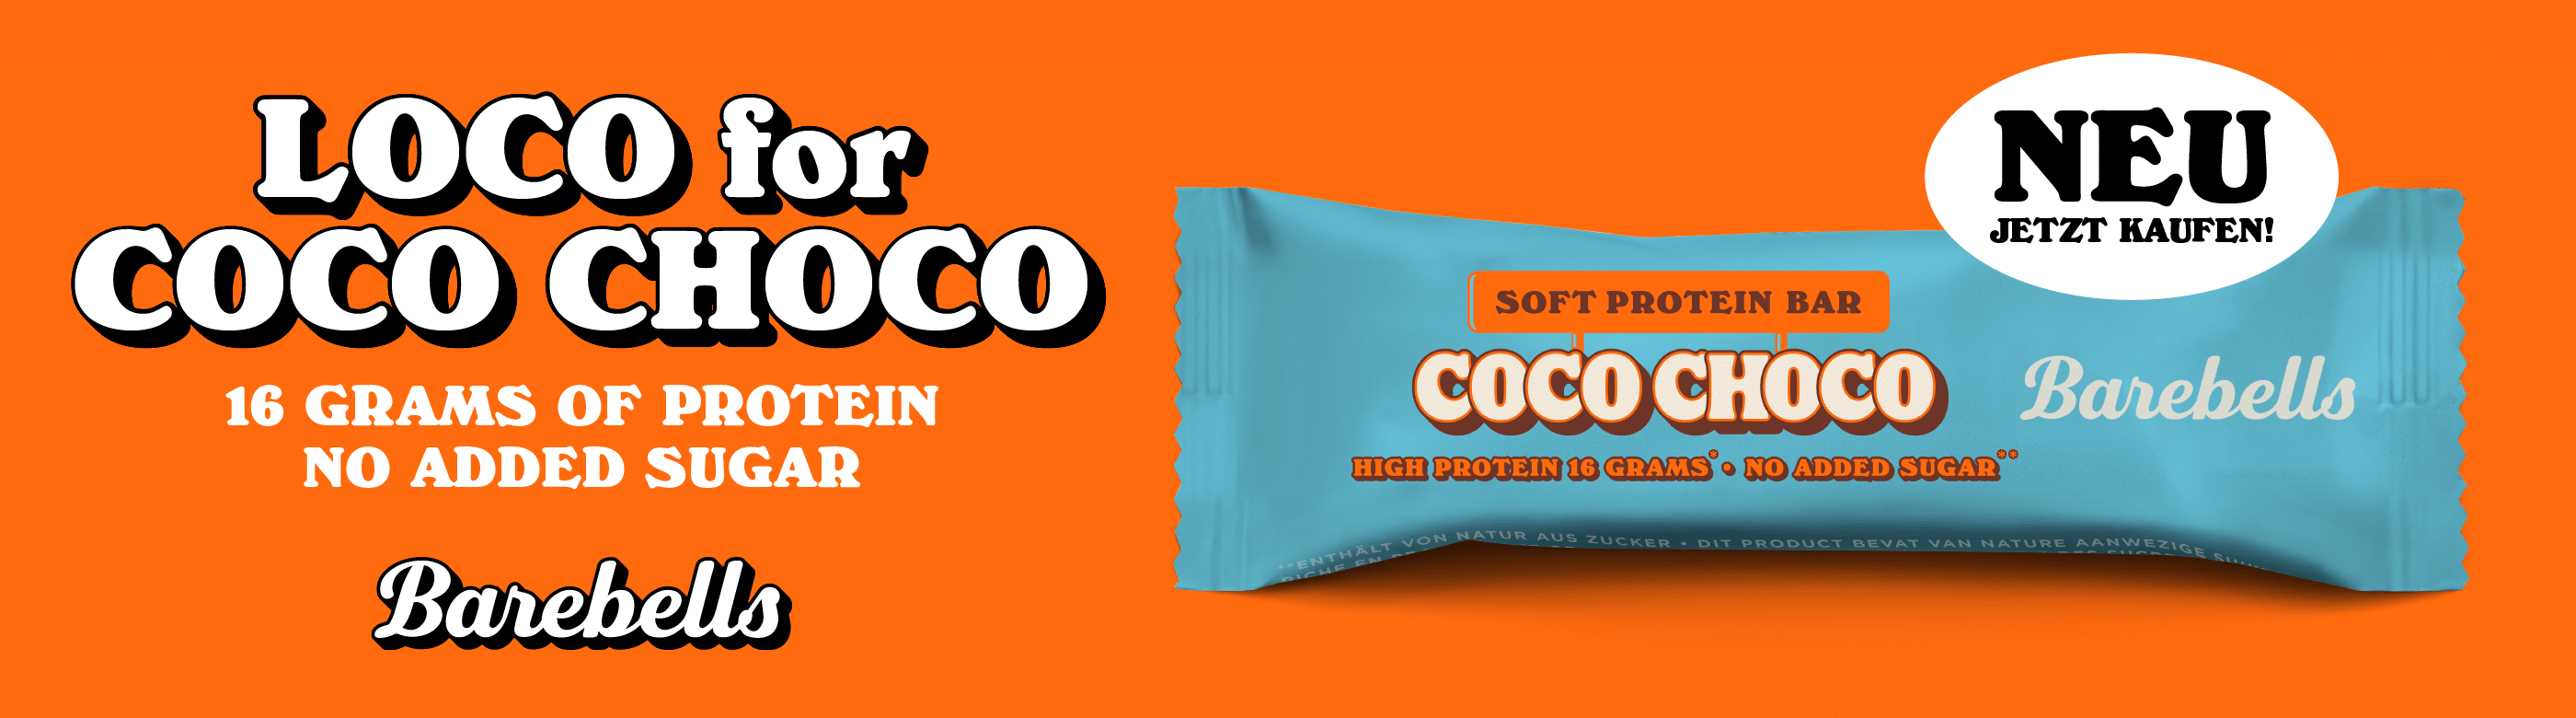 Coco choco banner